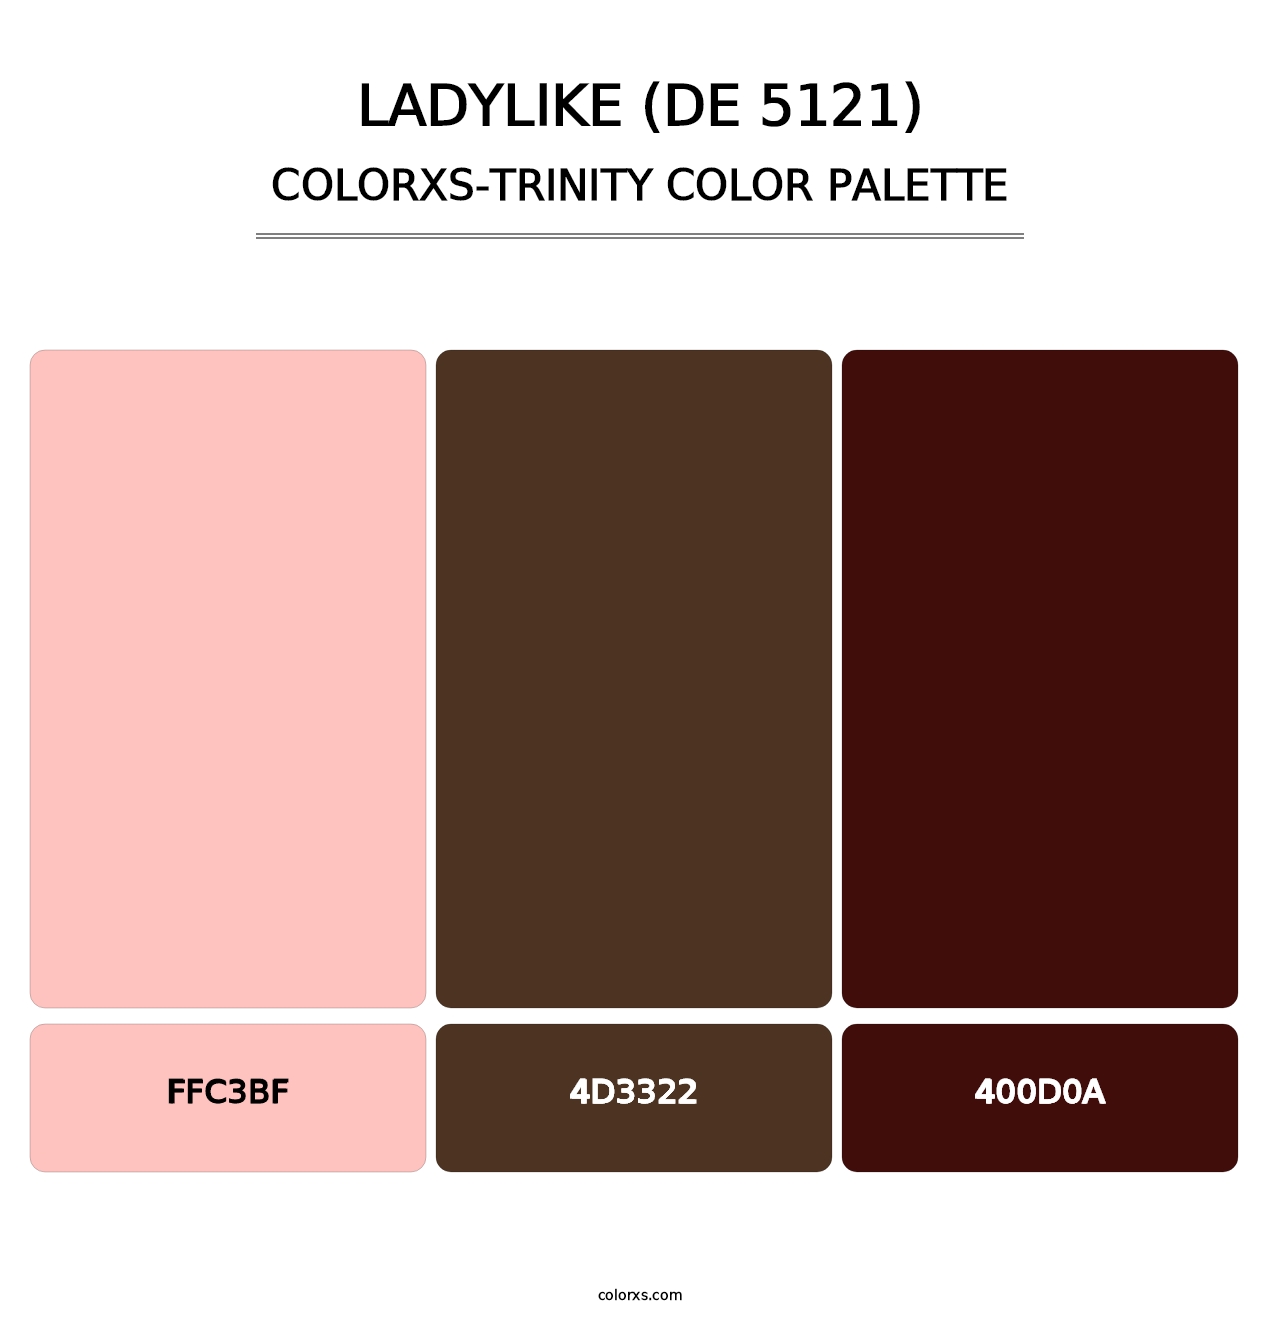 Ladylike (DE 5121) - Colorxs Trinity Palette